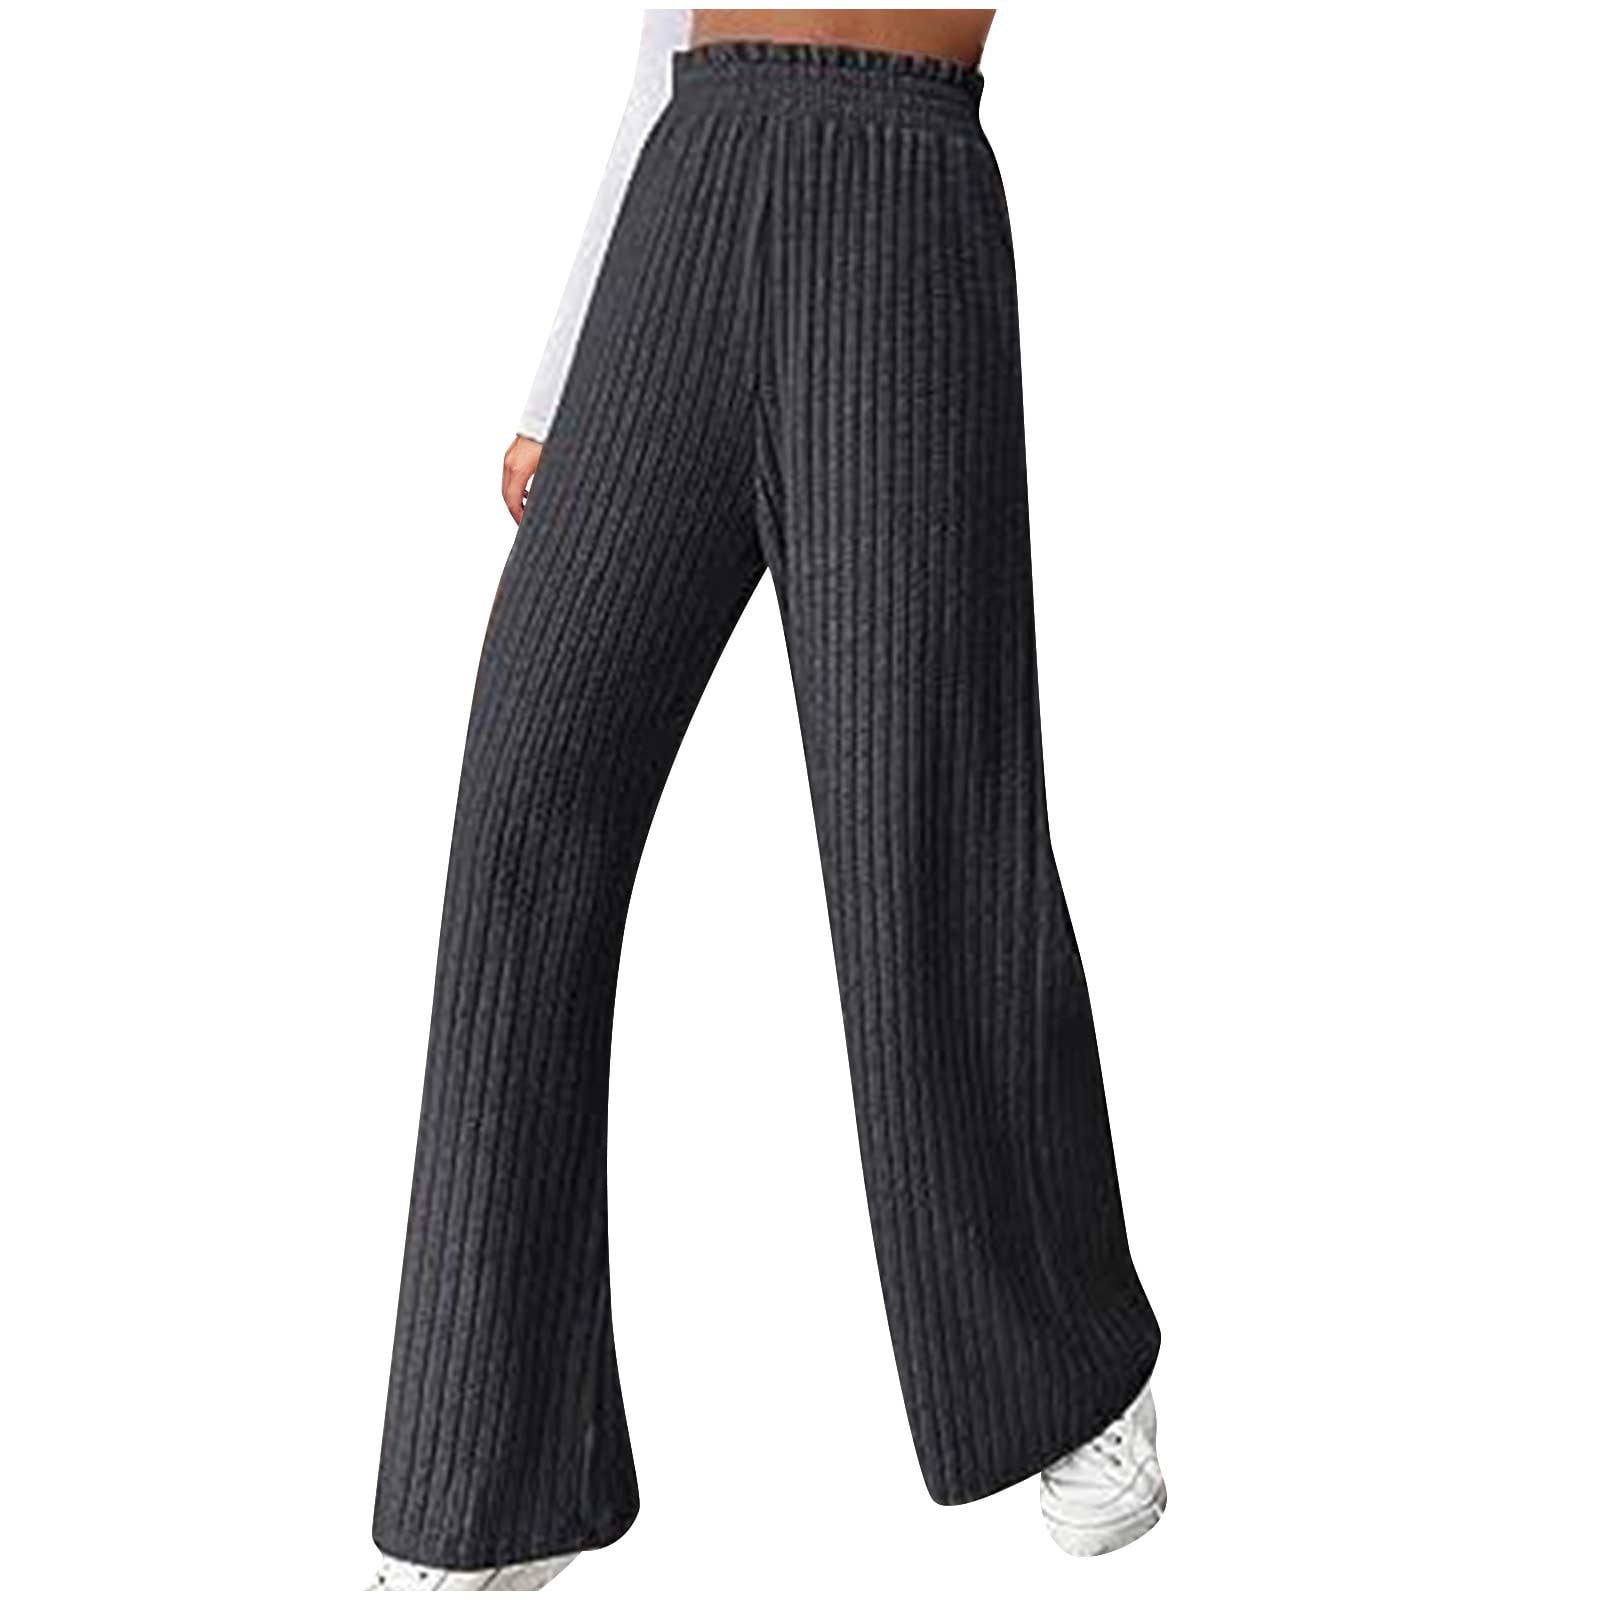 ADAGRO Womens Slacks Solid Rib Knit Flare Leg Pants (Color : Lime